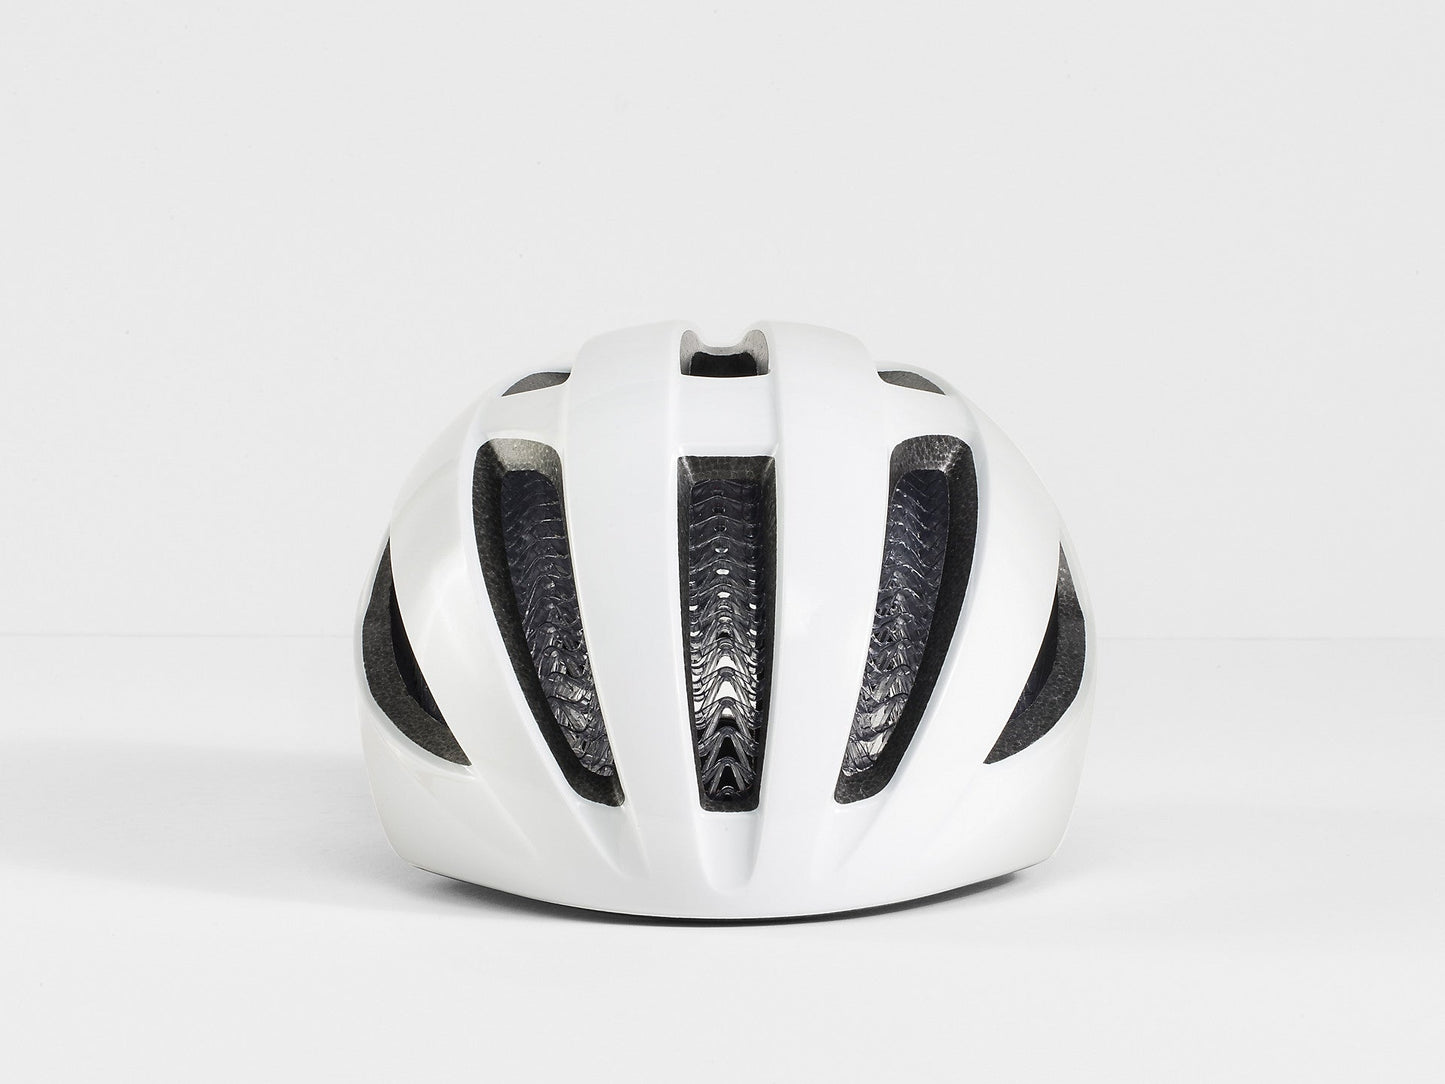 Bontrager Starvos WaveCel Cycling Helmet White